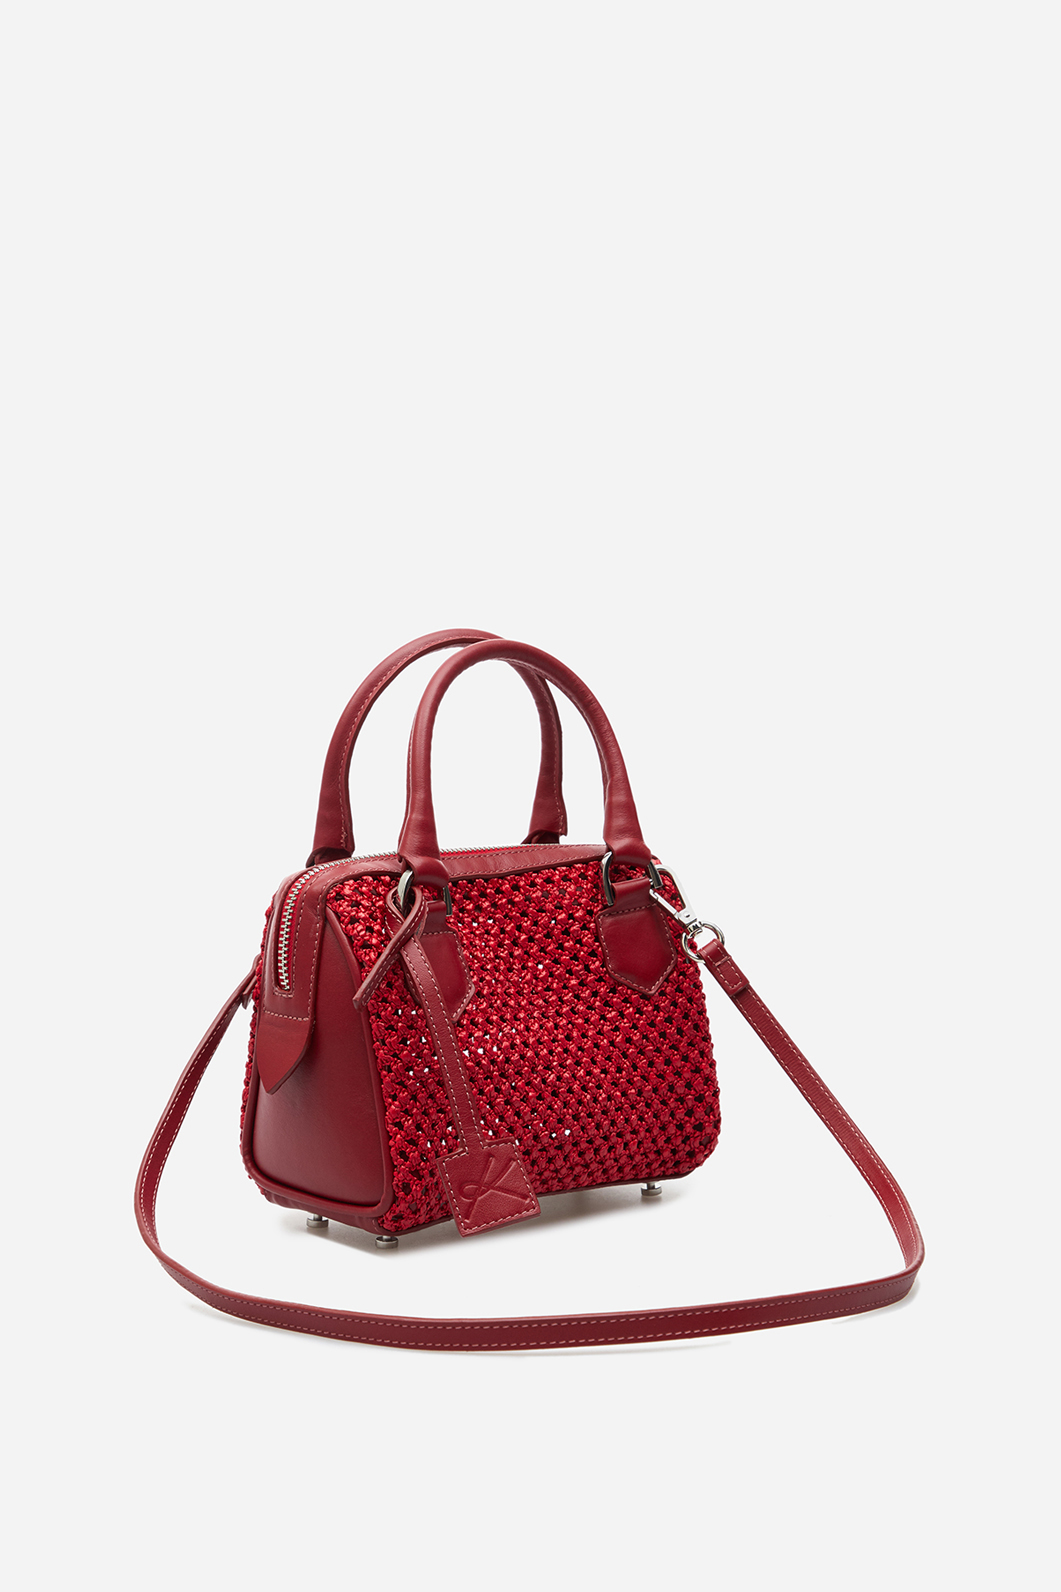 Drew Net Bag red textile shoulder bags  /silver/